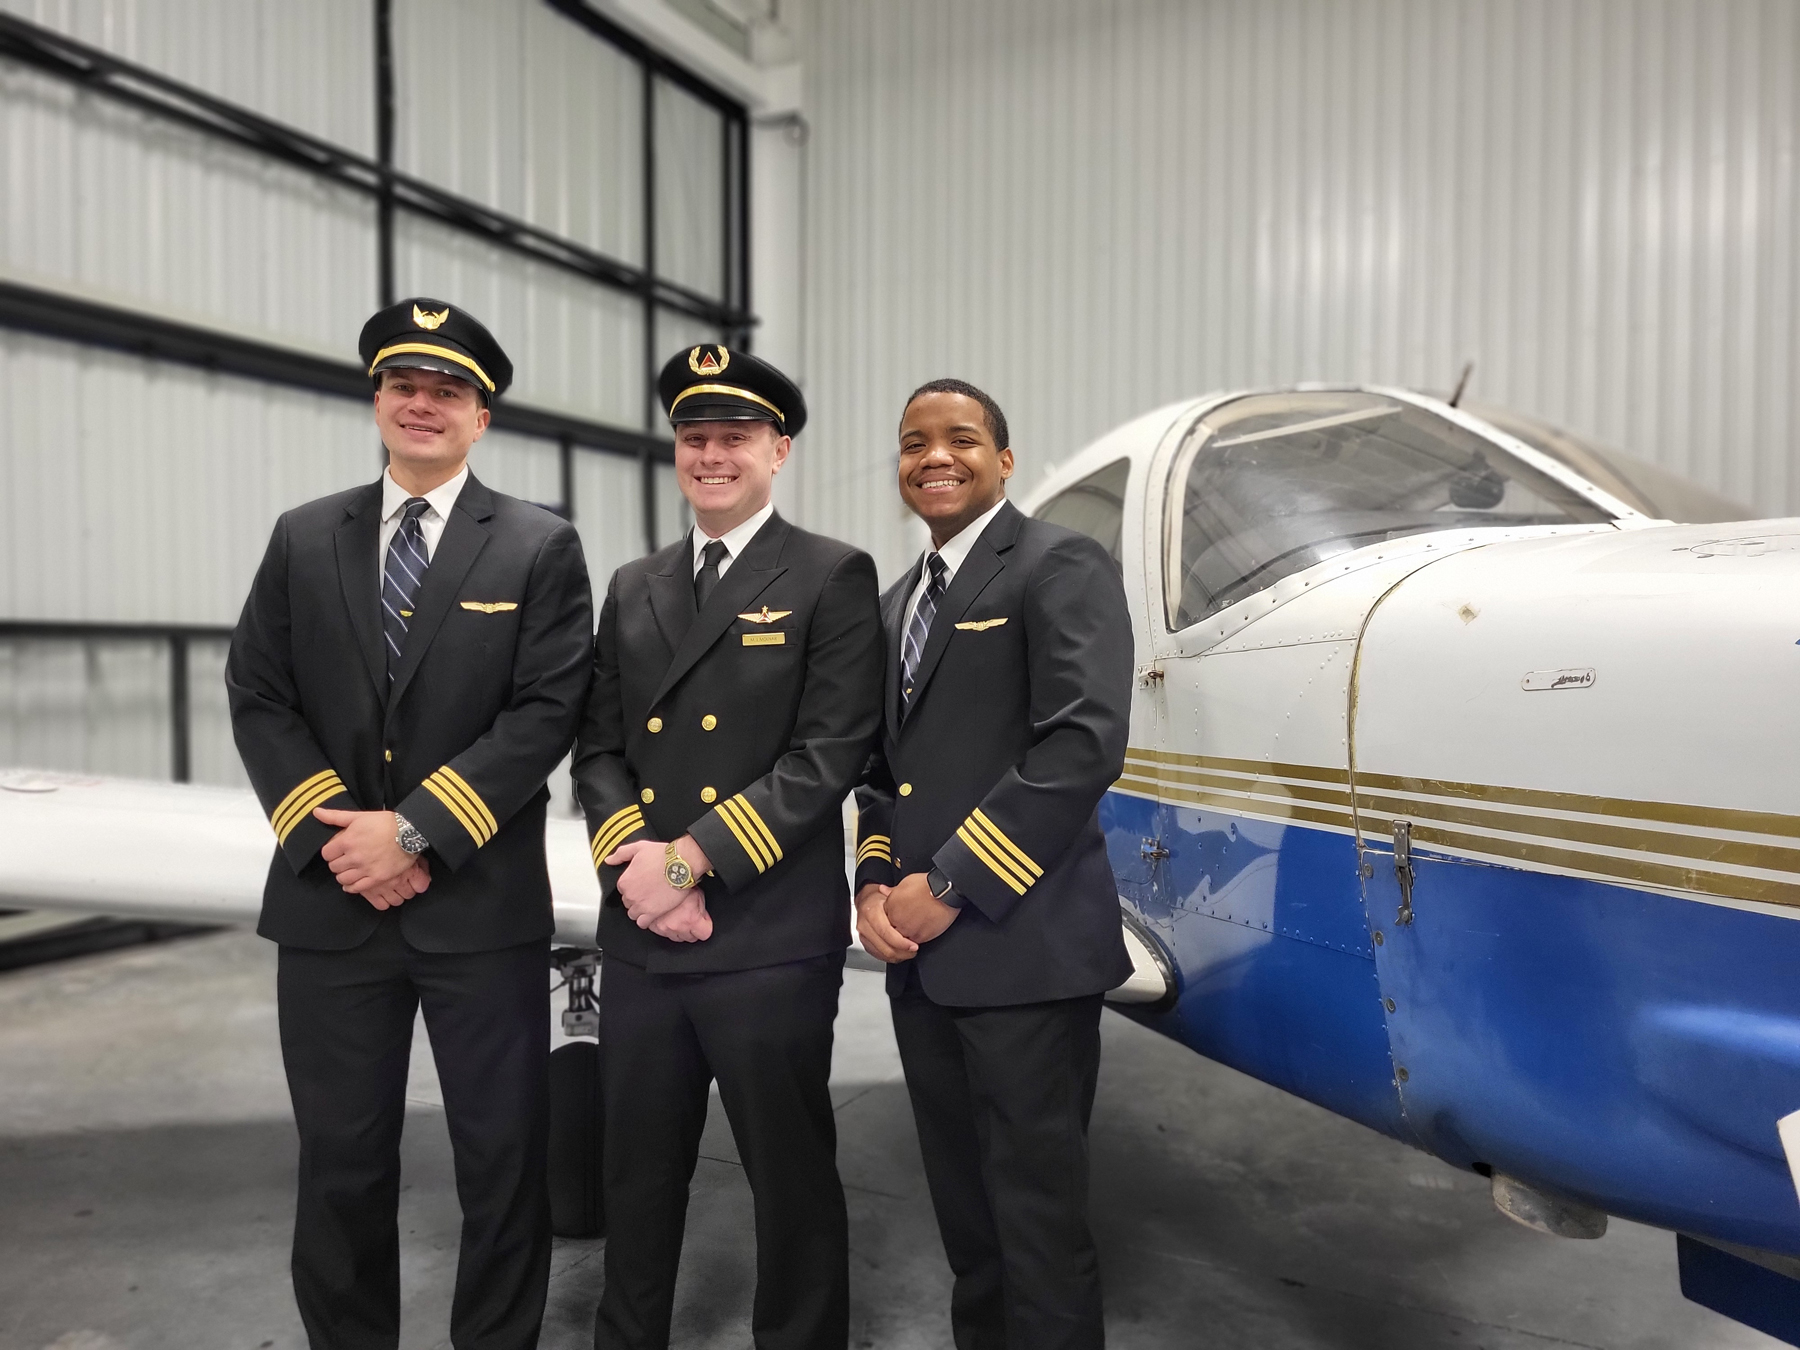 Aviation alumni in front of plane